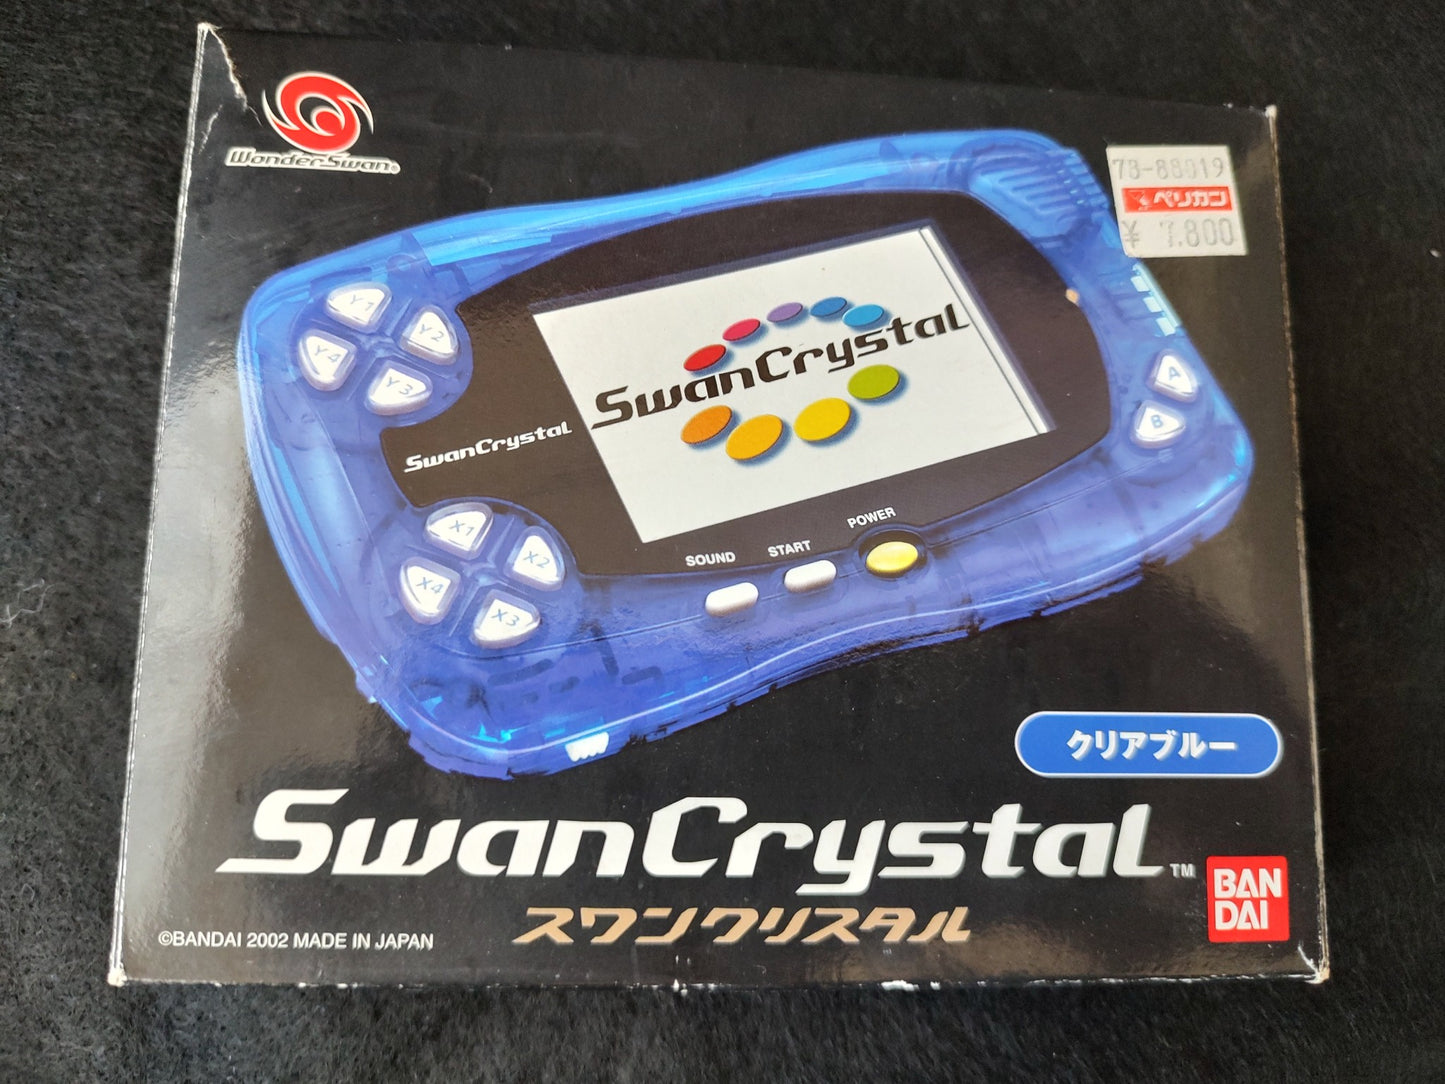 Bandai Wonder Swan Crystal Clear Blue BANDAI Console,Manual,Boexed set-d0929-